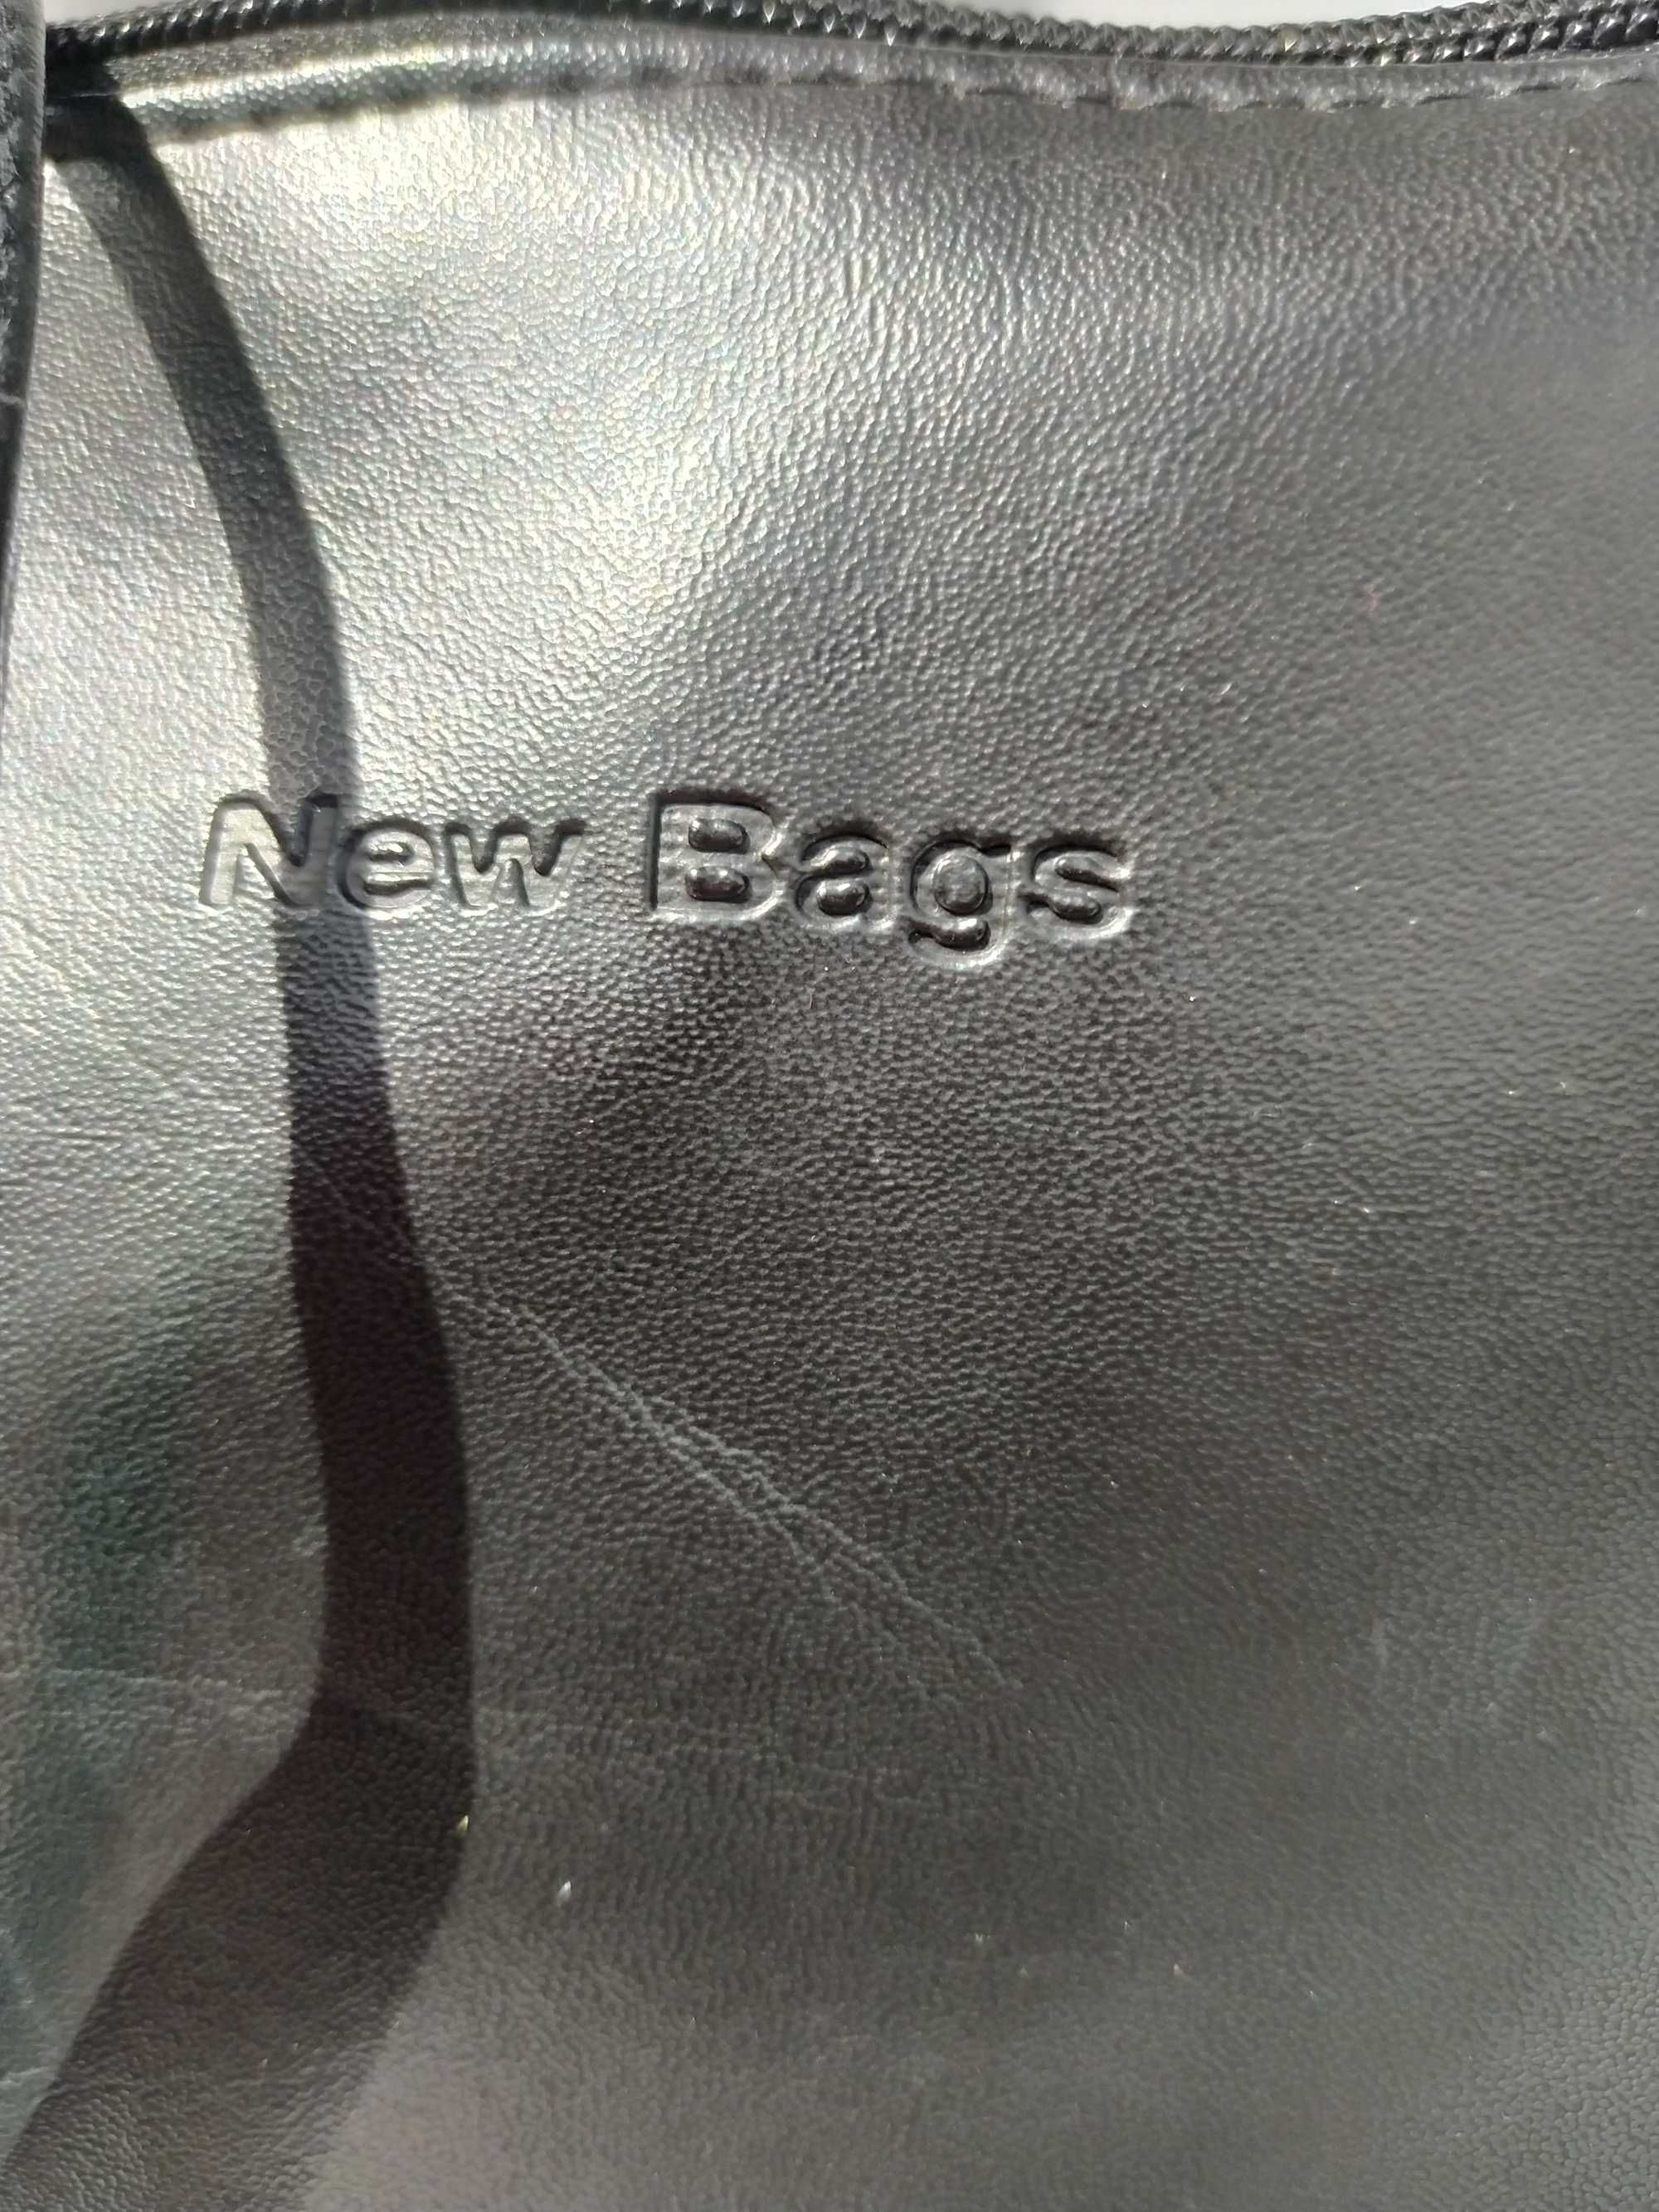 New bags czarna torebka